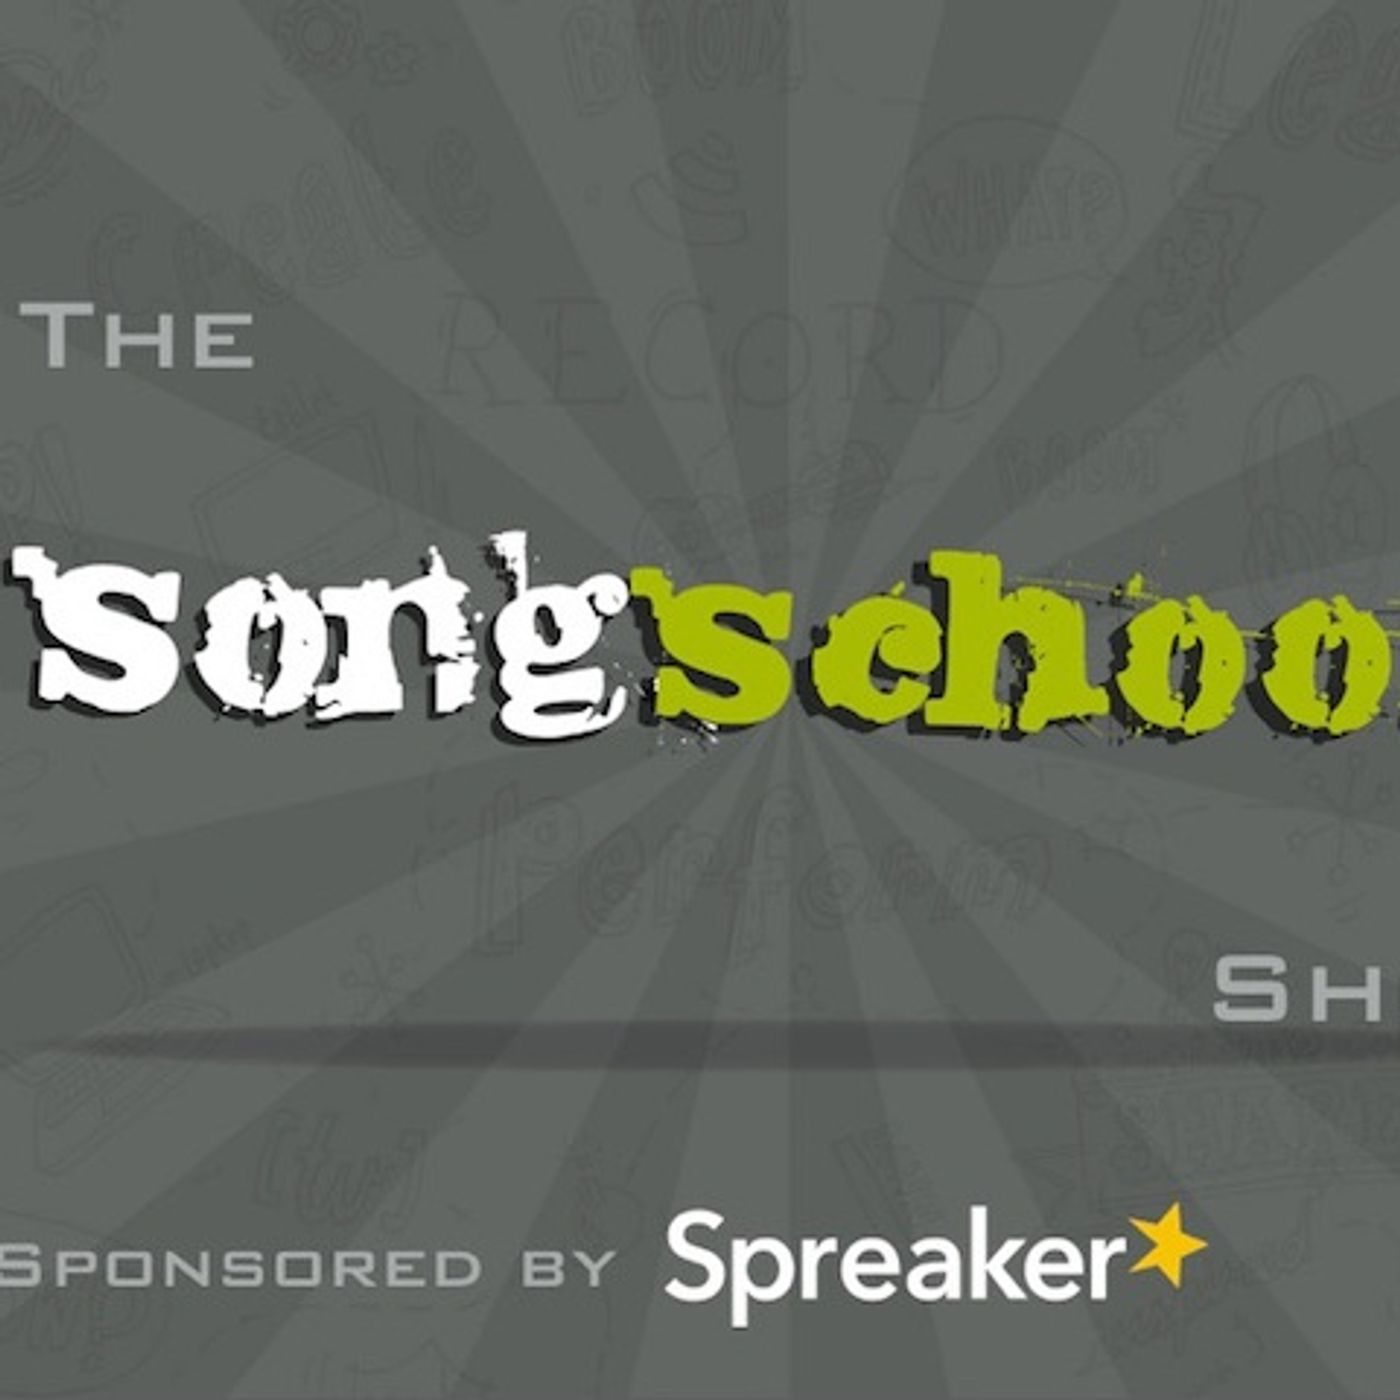 The Summer Songschool Show @ NCH